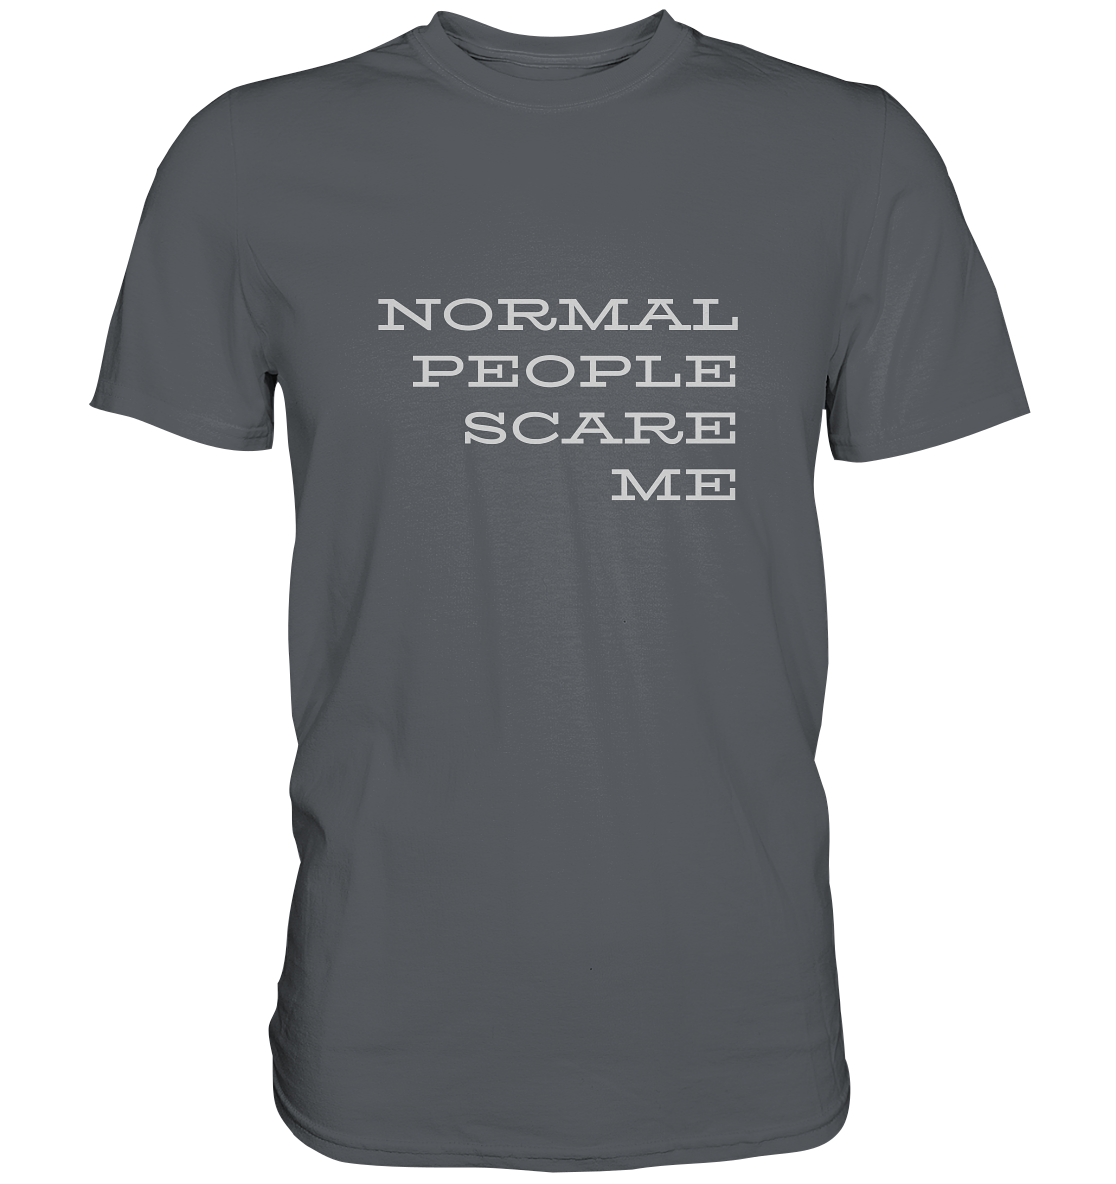 Herren-T-Shirt mit Aufdruck "Normal people scare me", grau